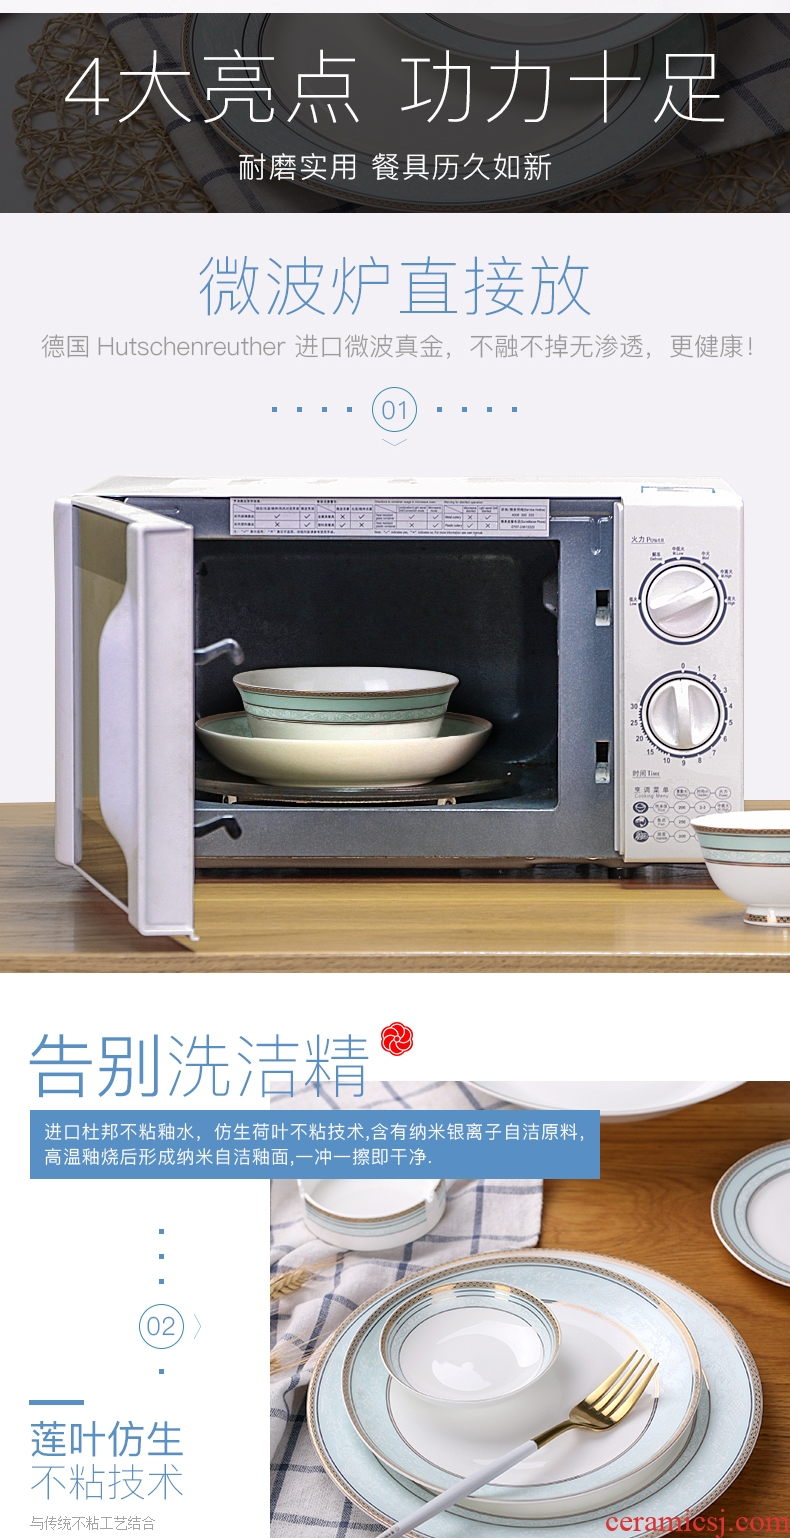 [directly] jingdezhen ceramic household jobs bone plate fish dish dish dish dish plate cutlery set jade qing